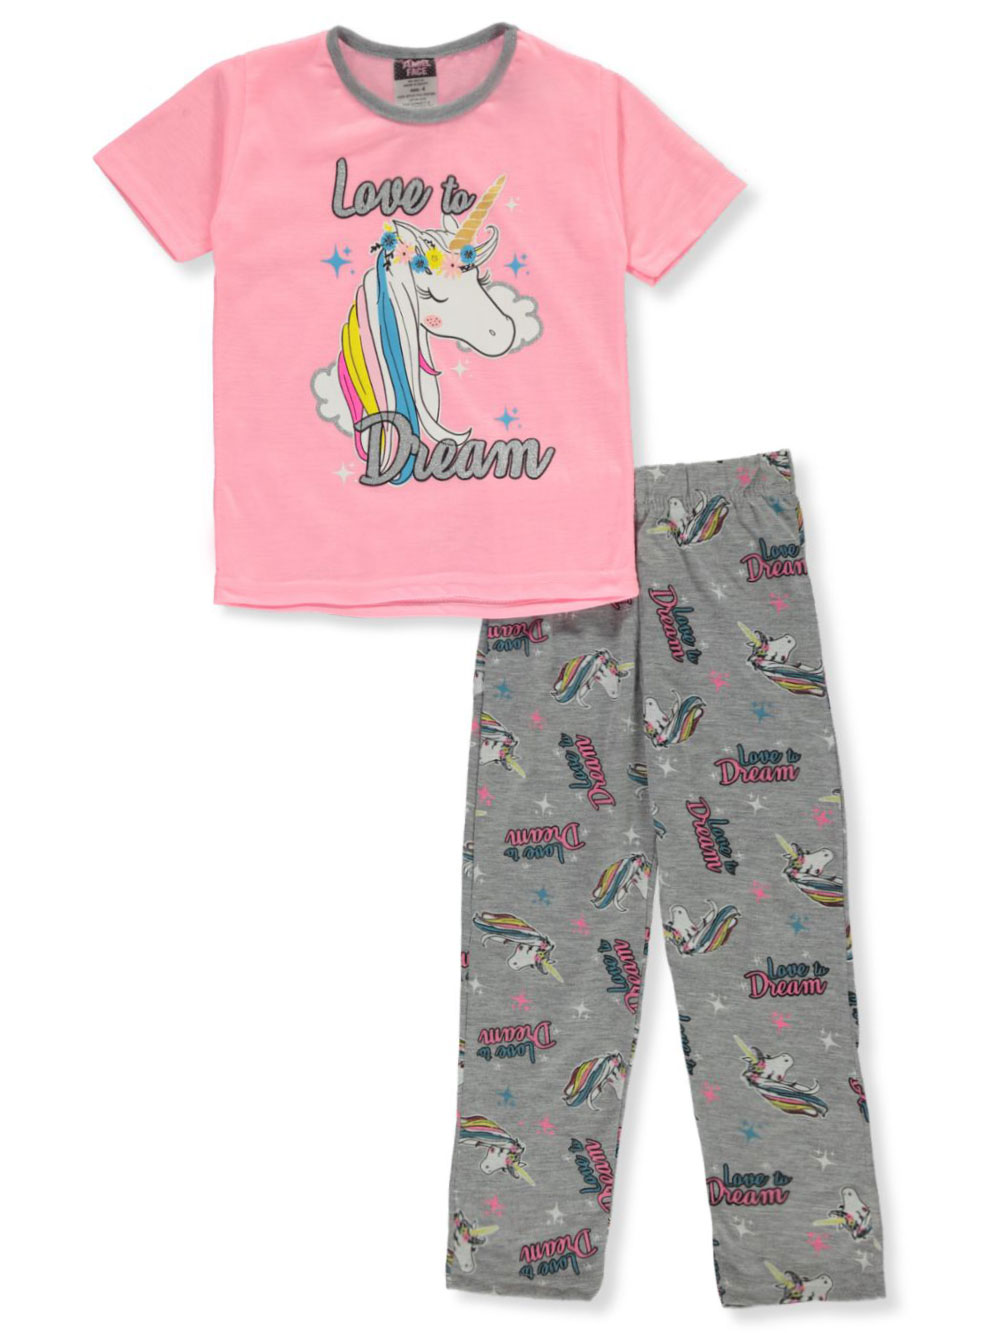 Girls Pink/gray Pajamas